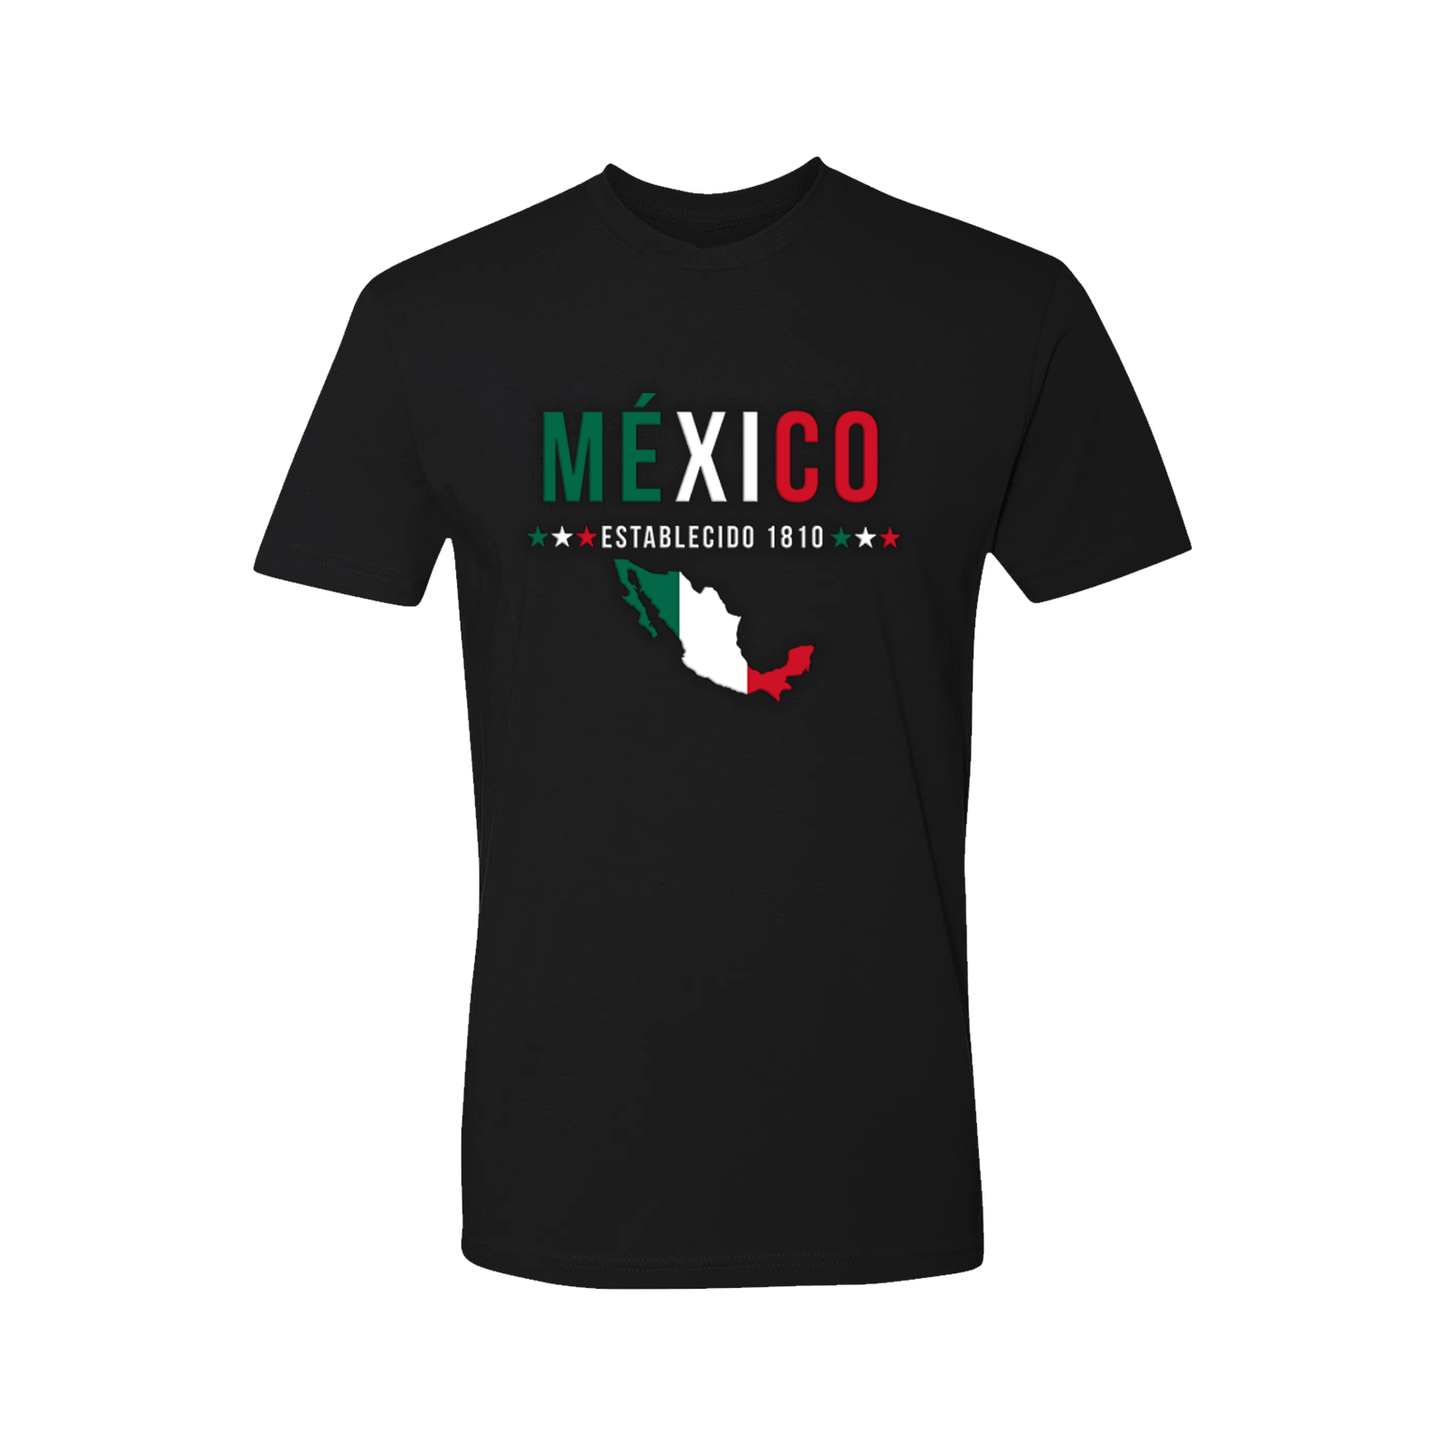 Mexico Short Sleeve Shirt - Adult